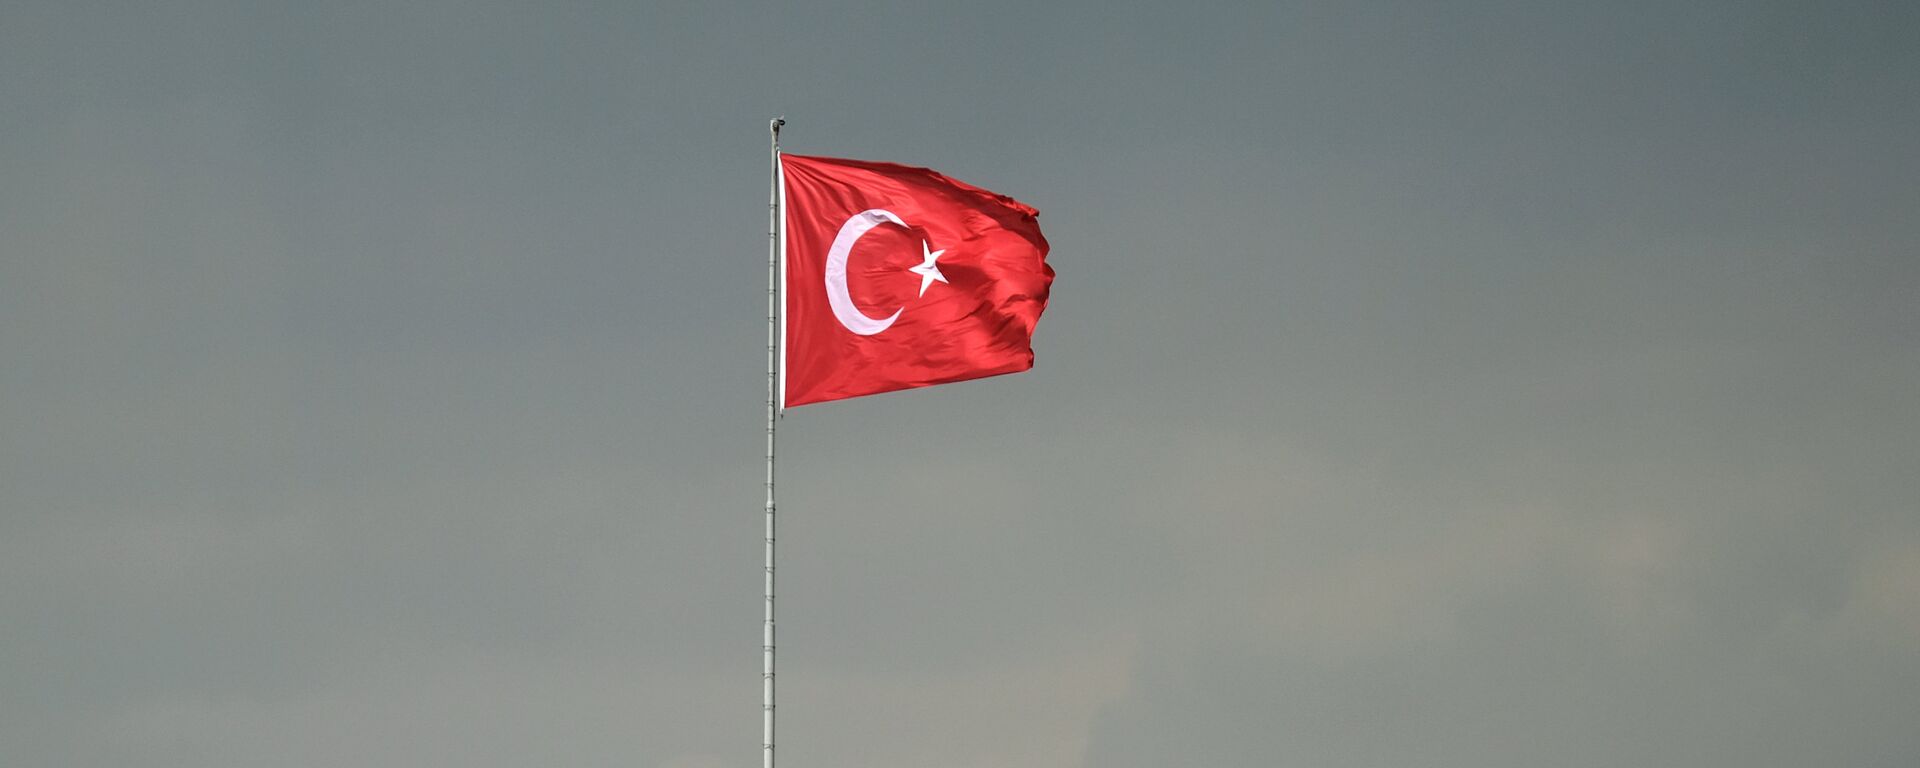 Флаг Турции, архивное фото - Sputnik Грузия, 1920, 24.06.2021